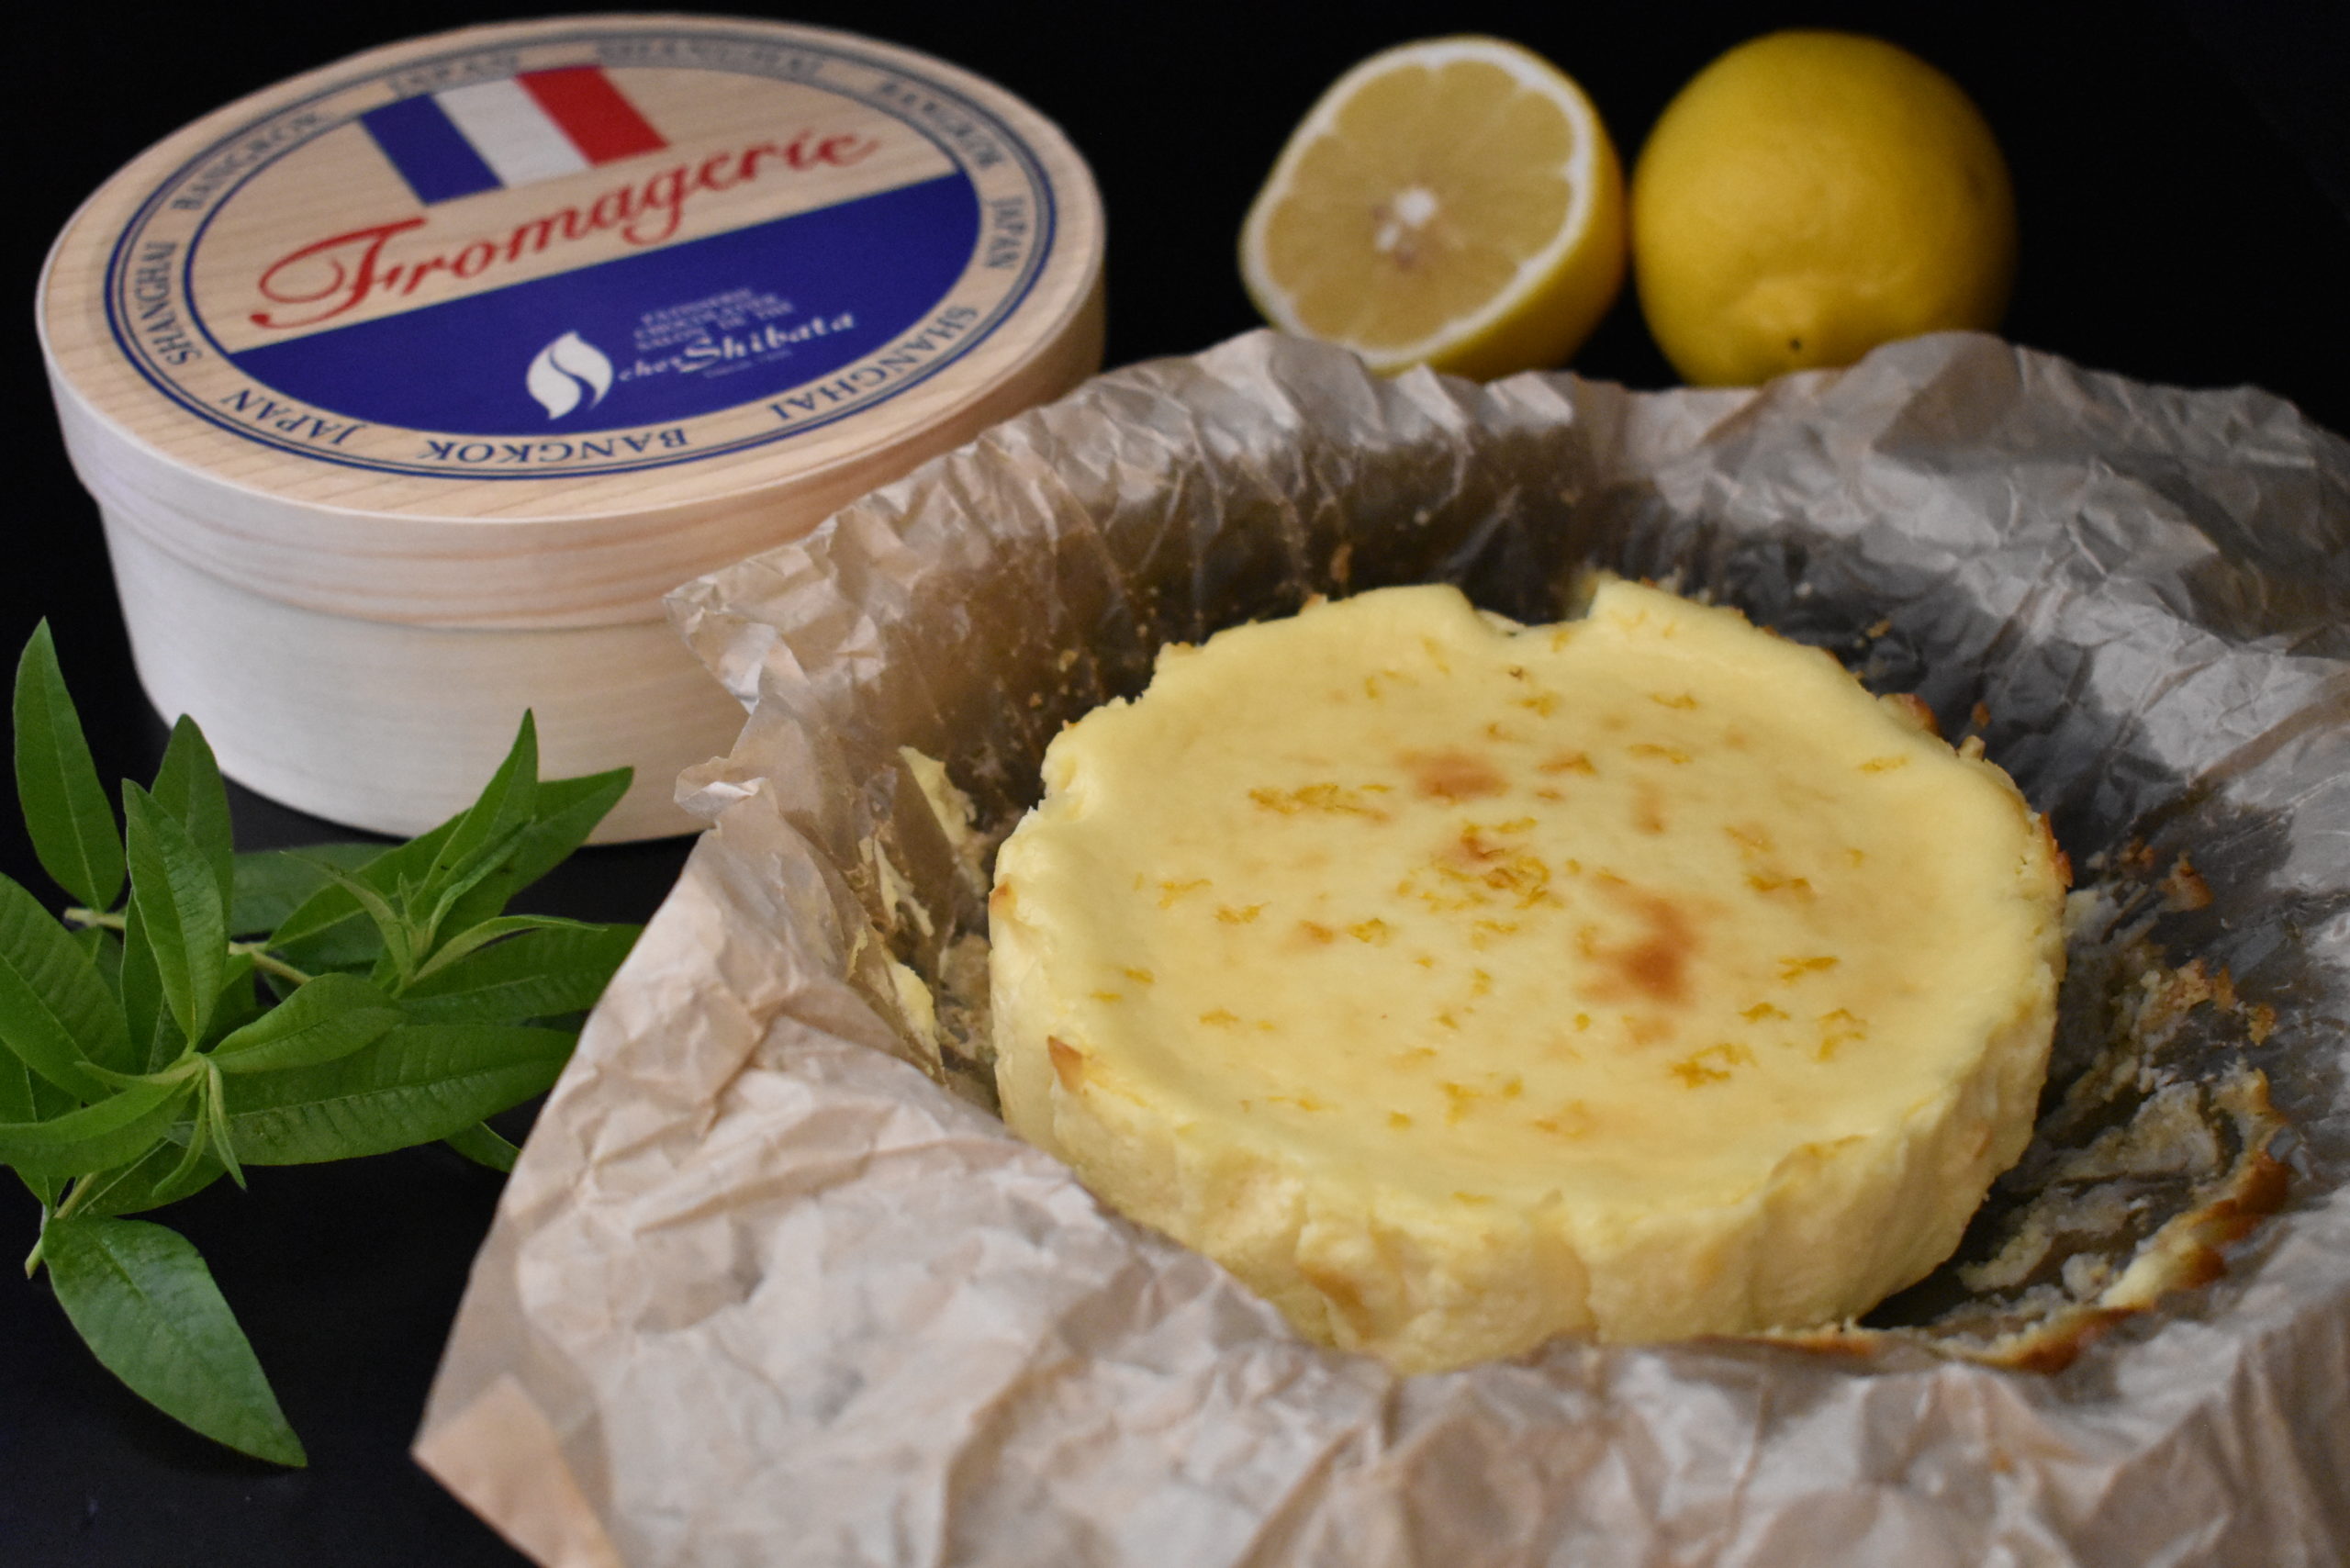 New塩レモンのチーズケーキ シェ シバタ オンラインショップ